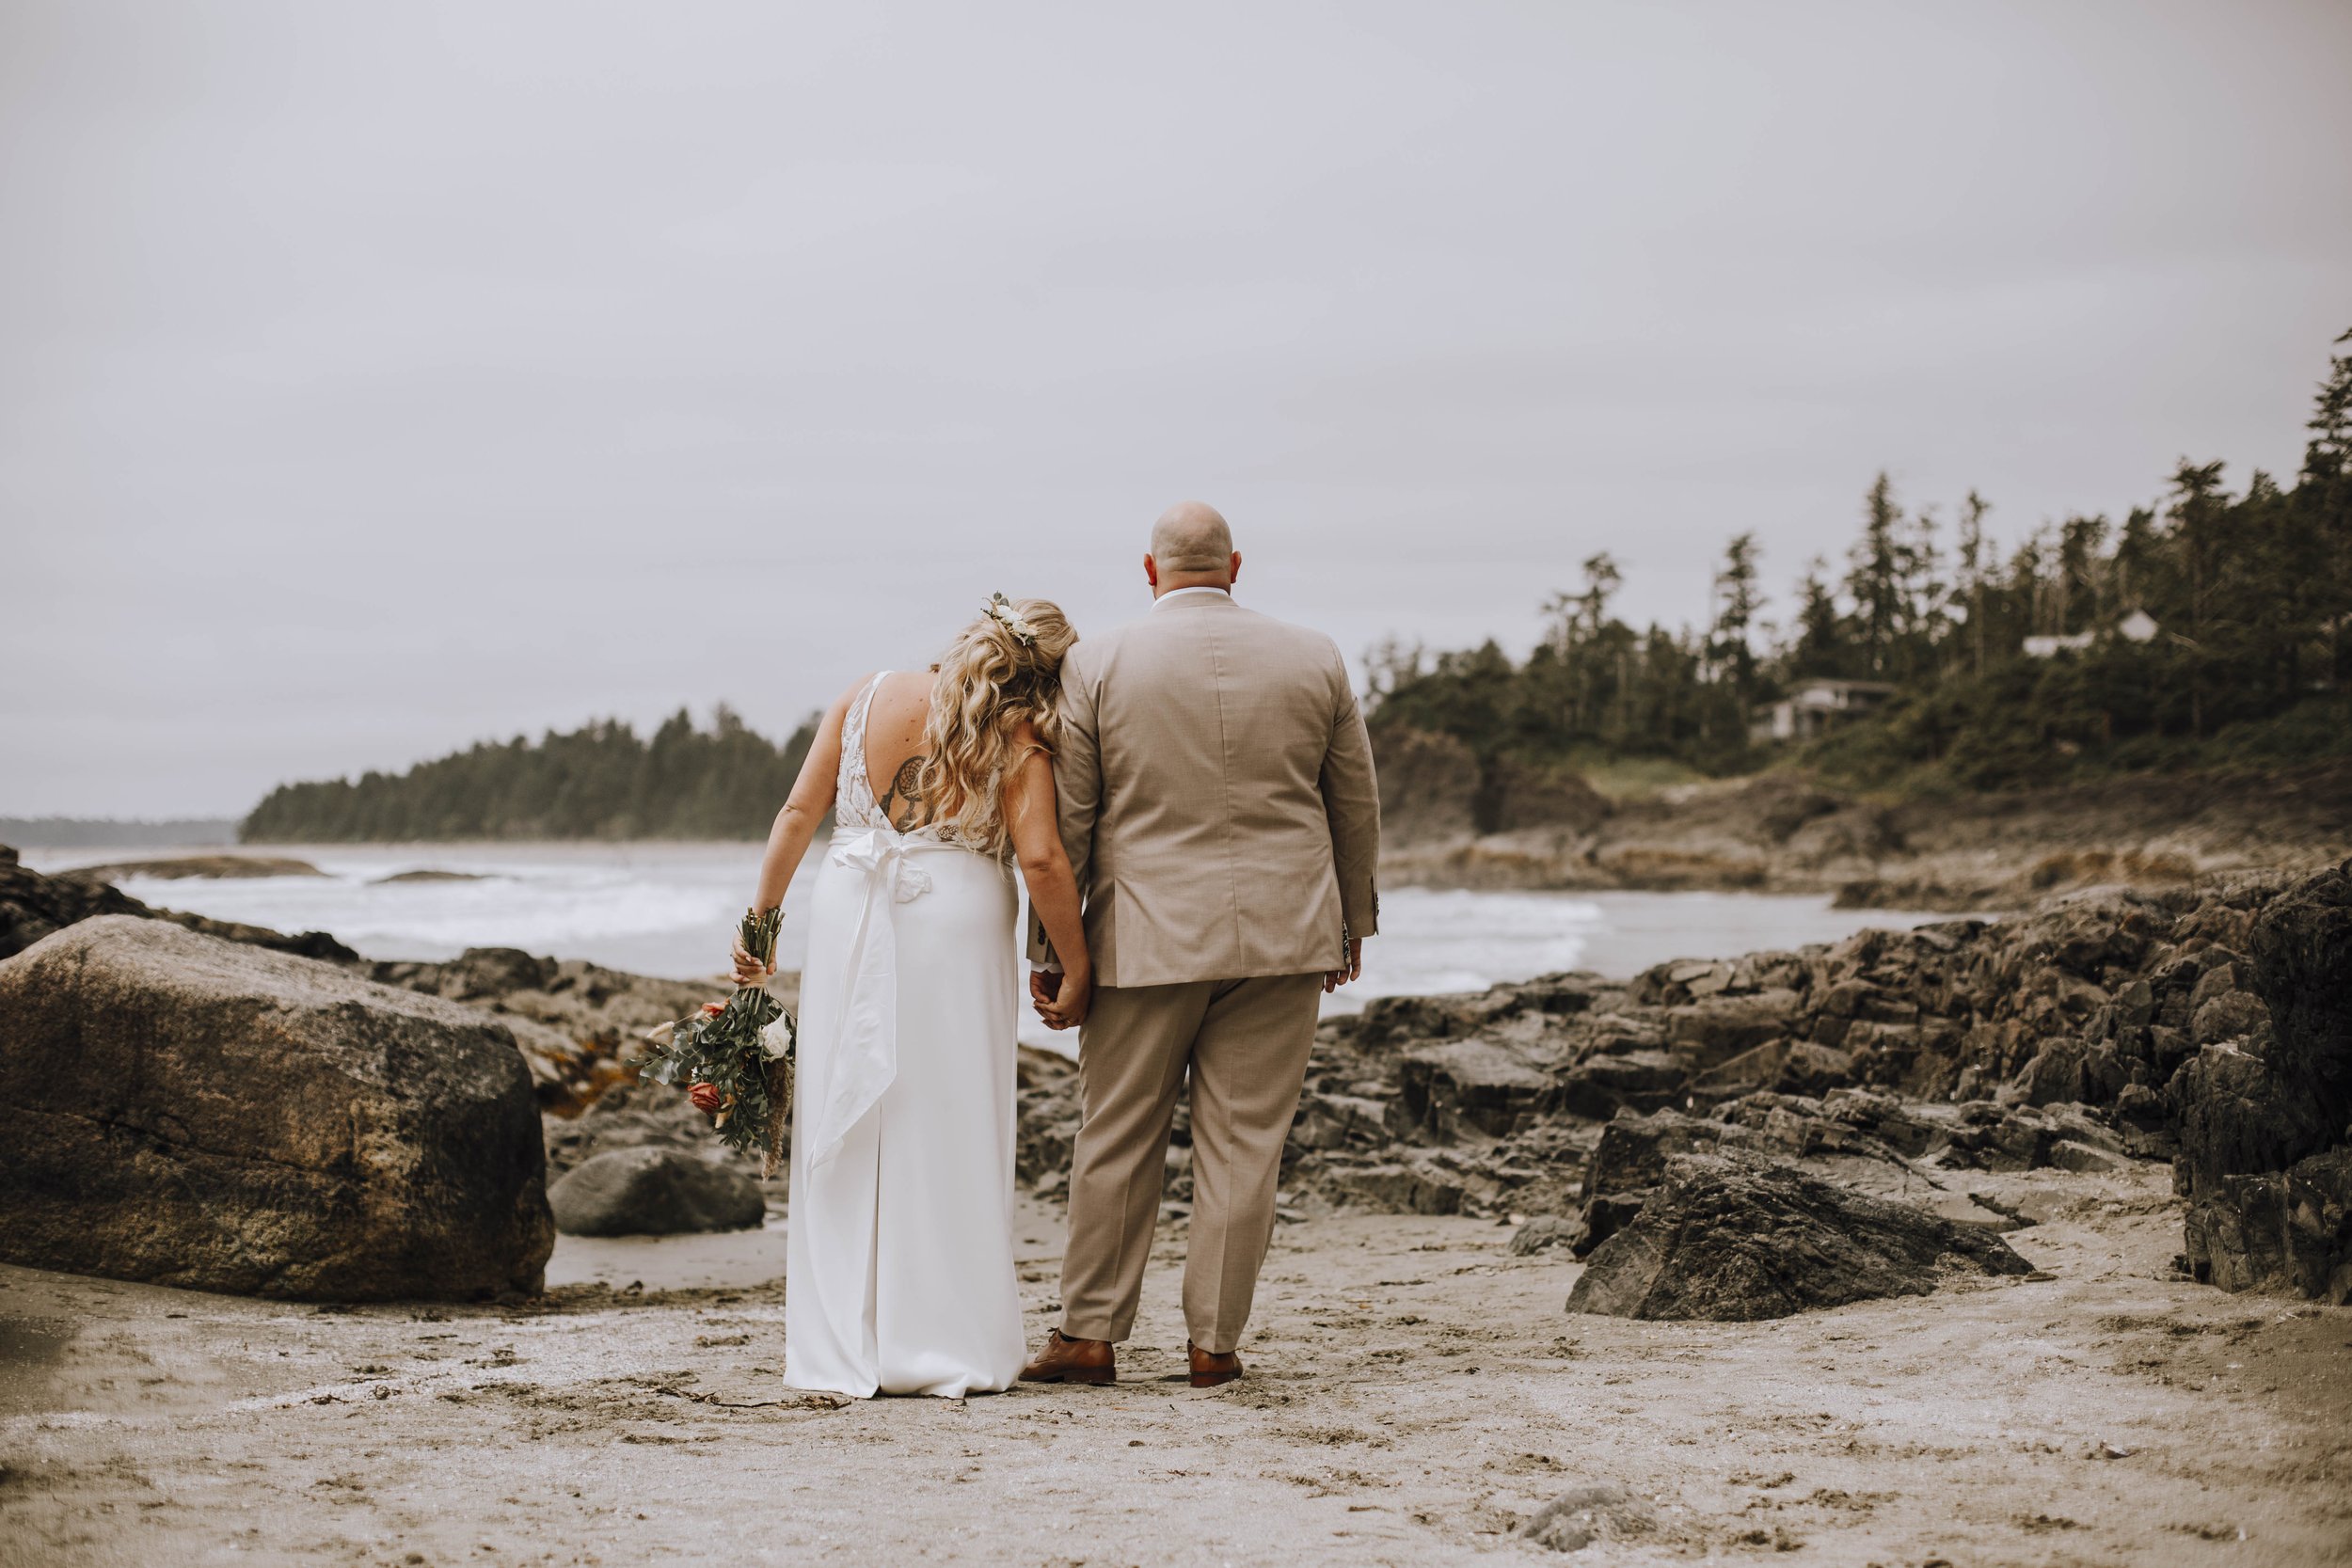 Jamie and Brad wedding - Tofino Vancouver Island British Columbia - Elyse Anna Photography-9235.jpg